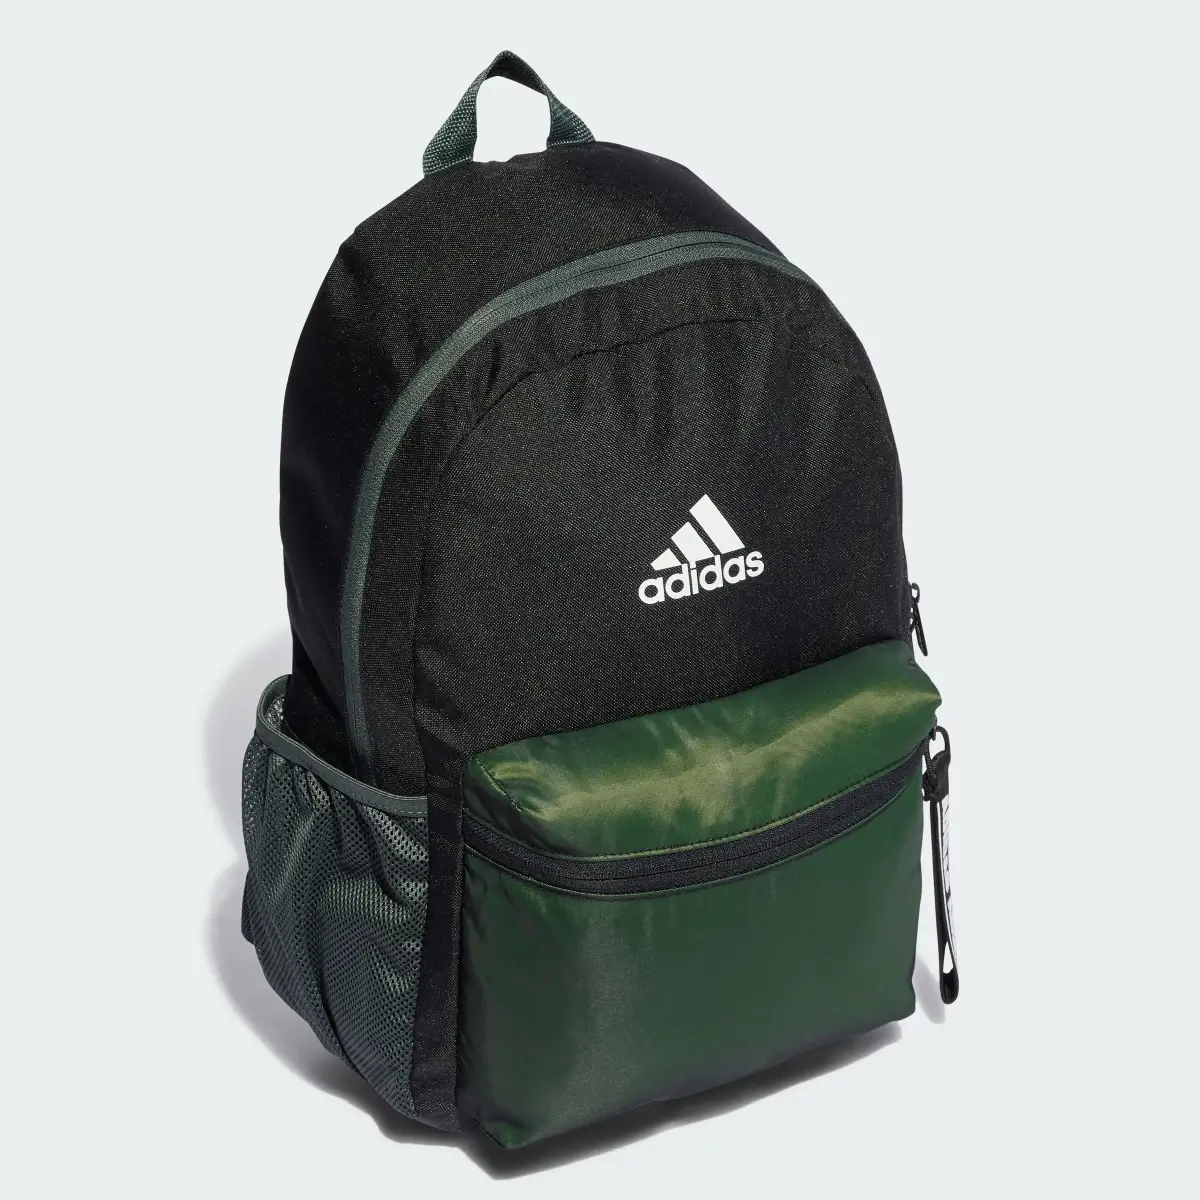 Adidas Dance Backpack. 2